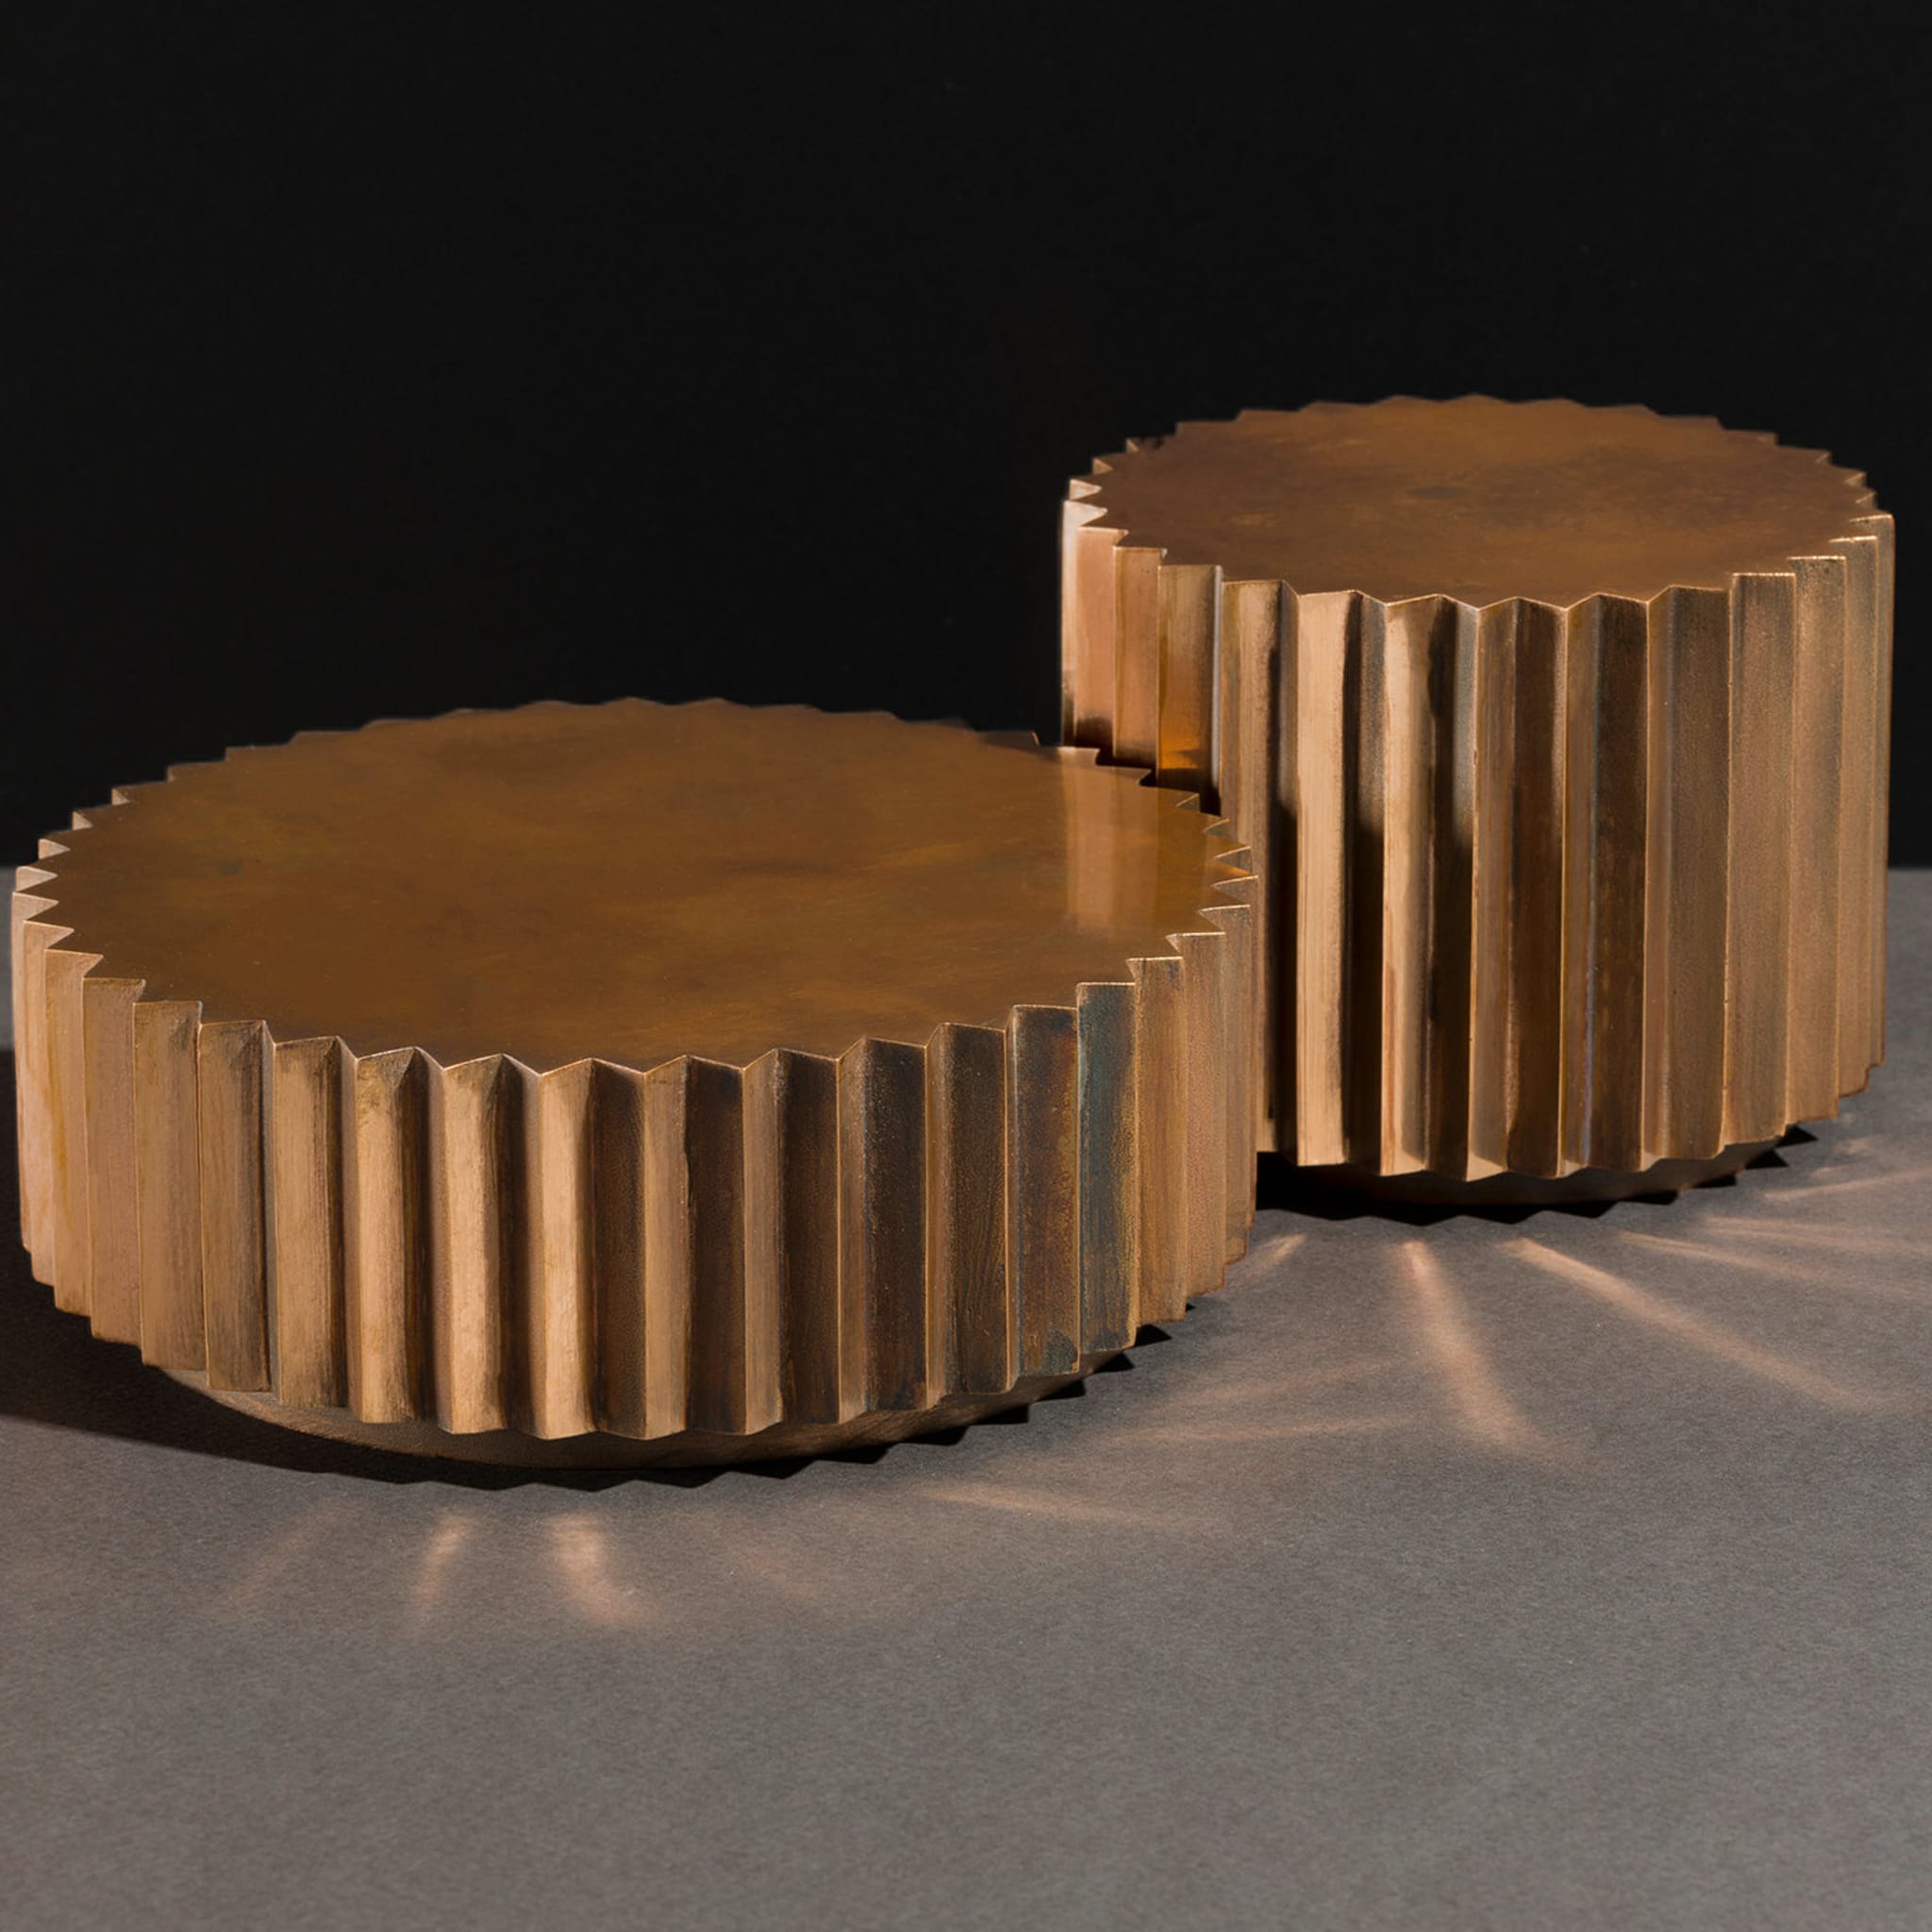 Doris Cast Oxidized Bronze Multifaceted Coffee Table Set - Alternative view 4